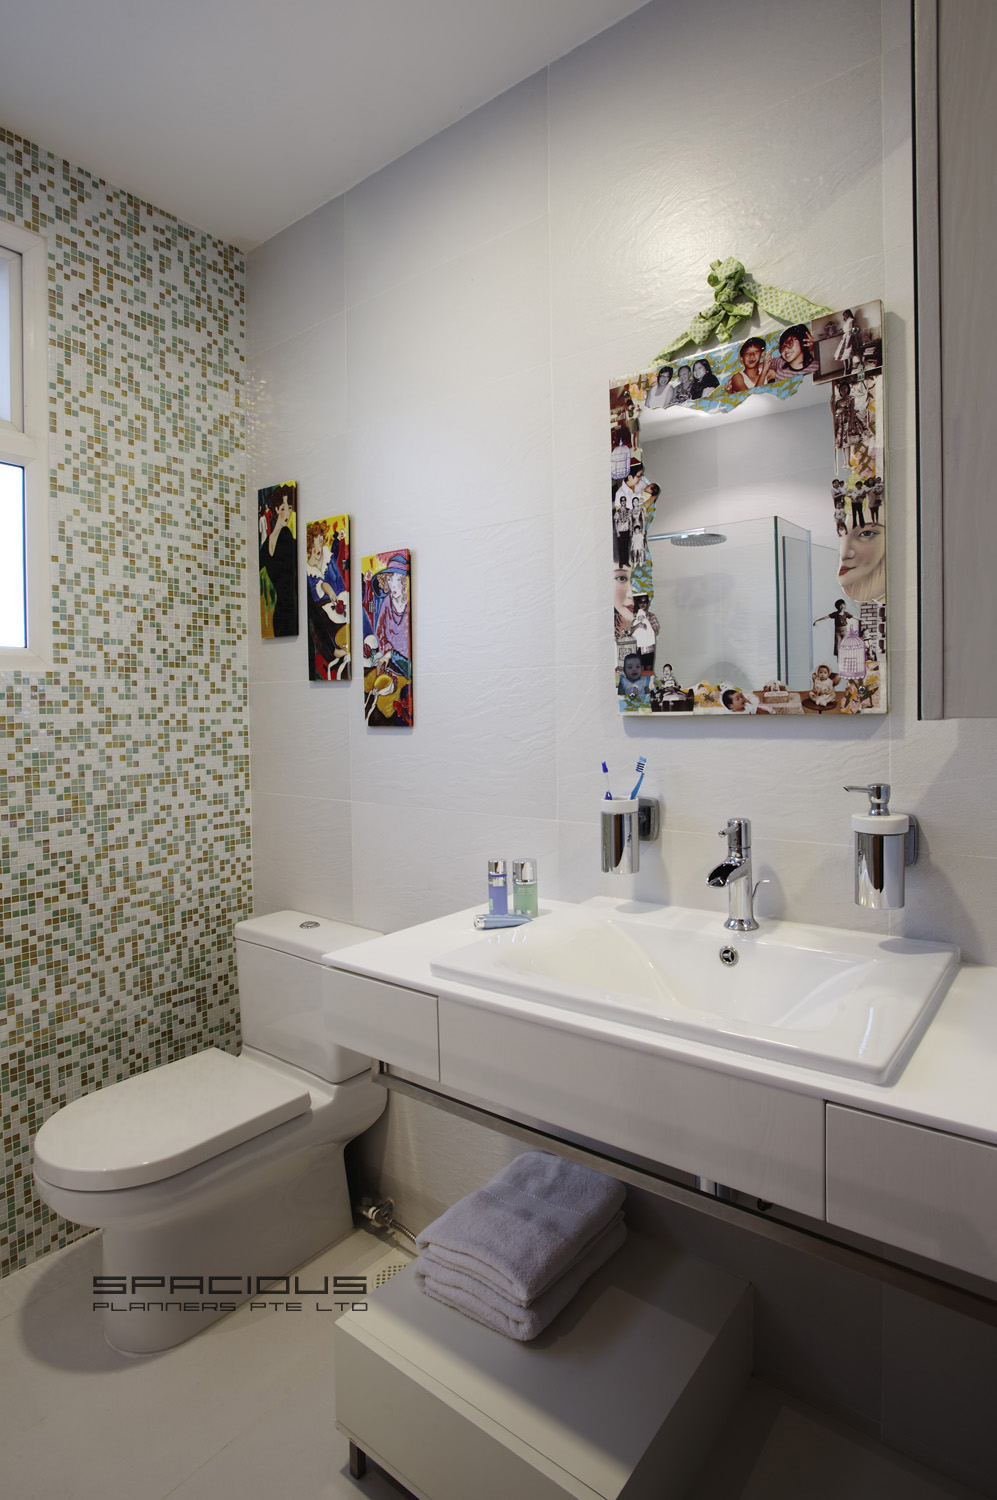 Country, Eclectic, Scandinavian Design - Bathroom - Condominium - Design by Spacious Planners Pte Ltd